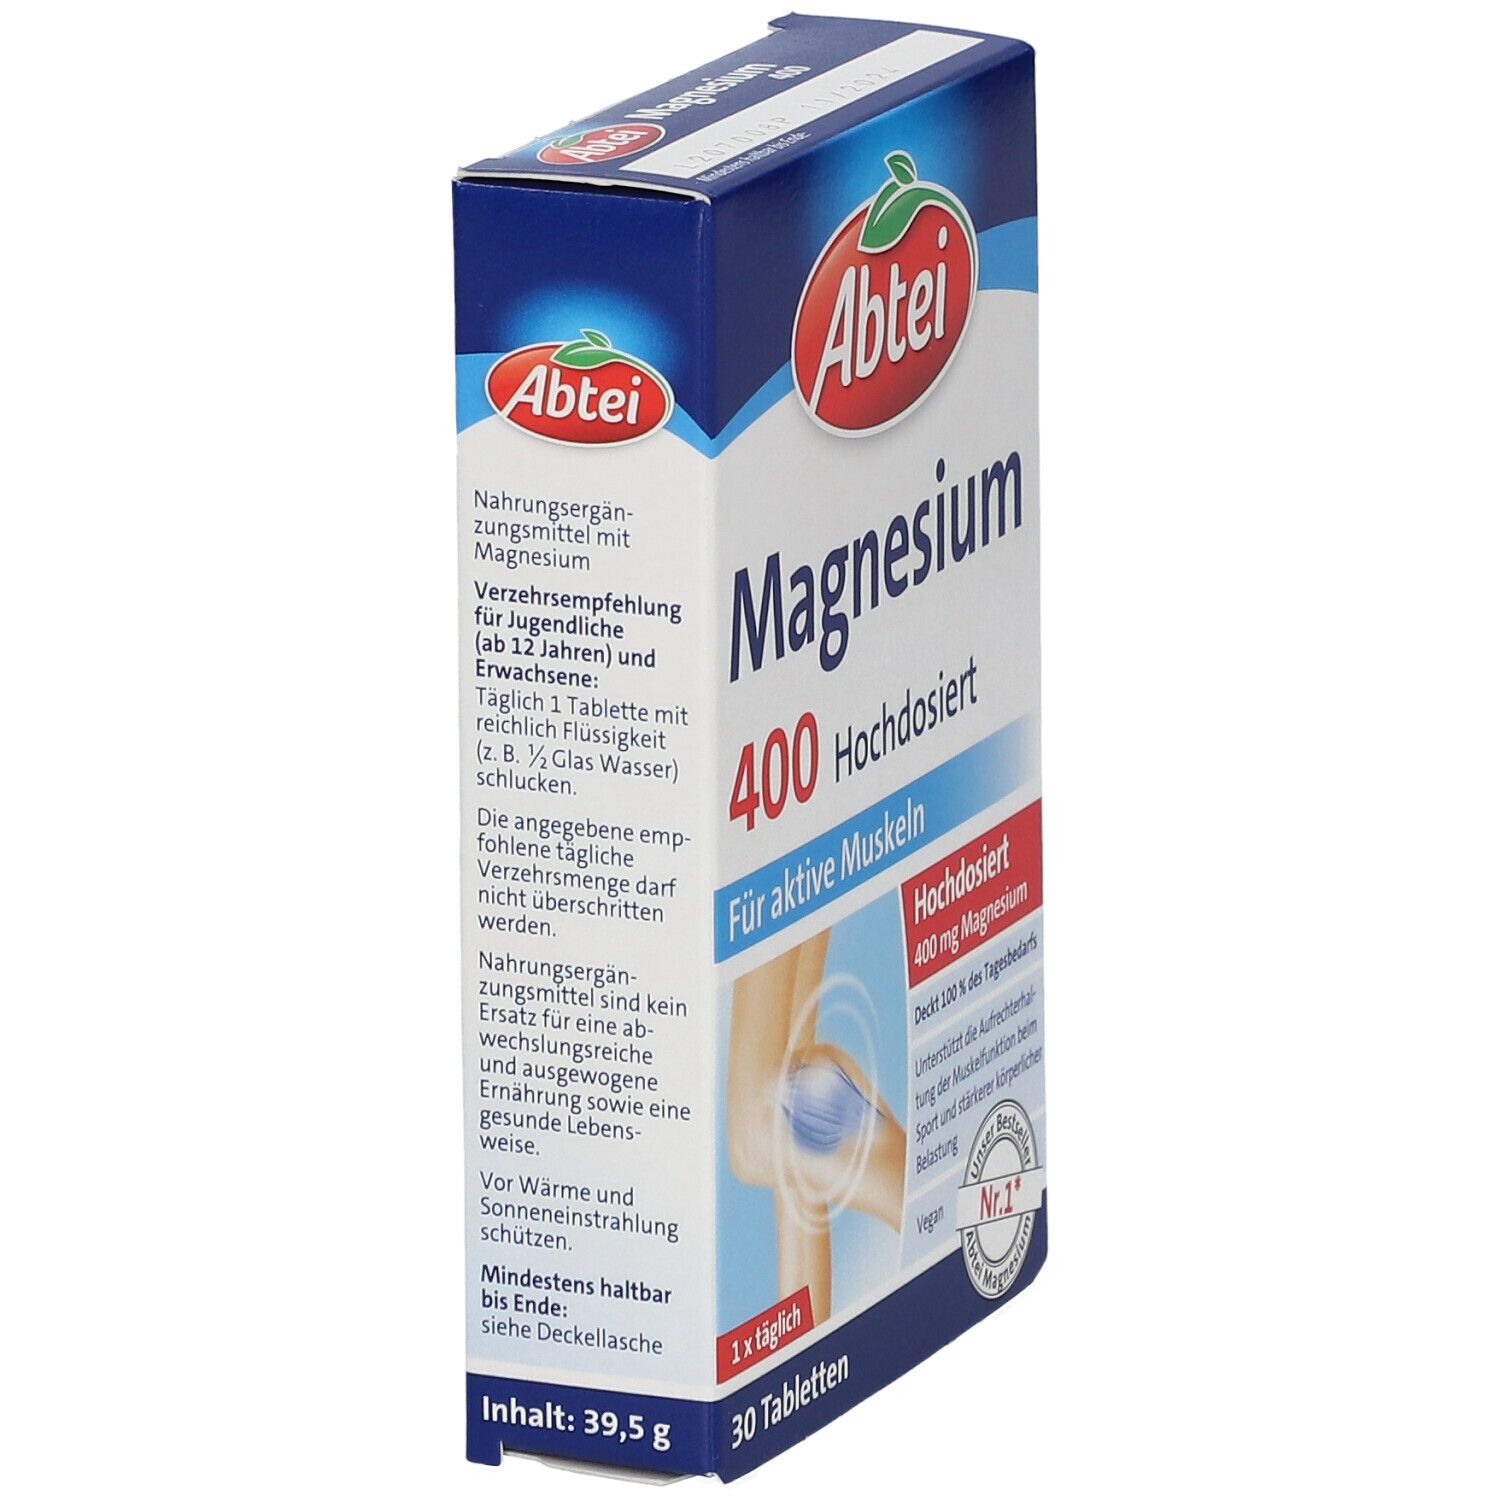 Abtei Magnesium 400